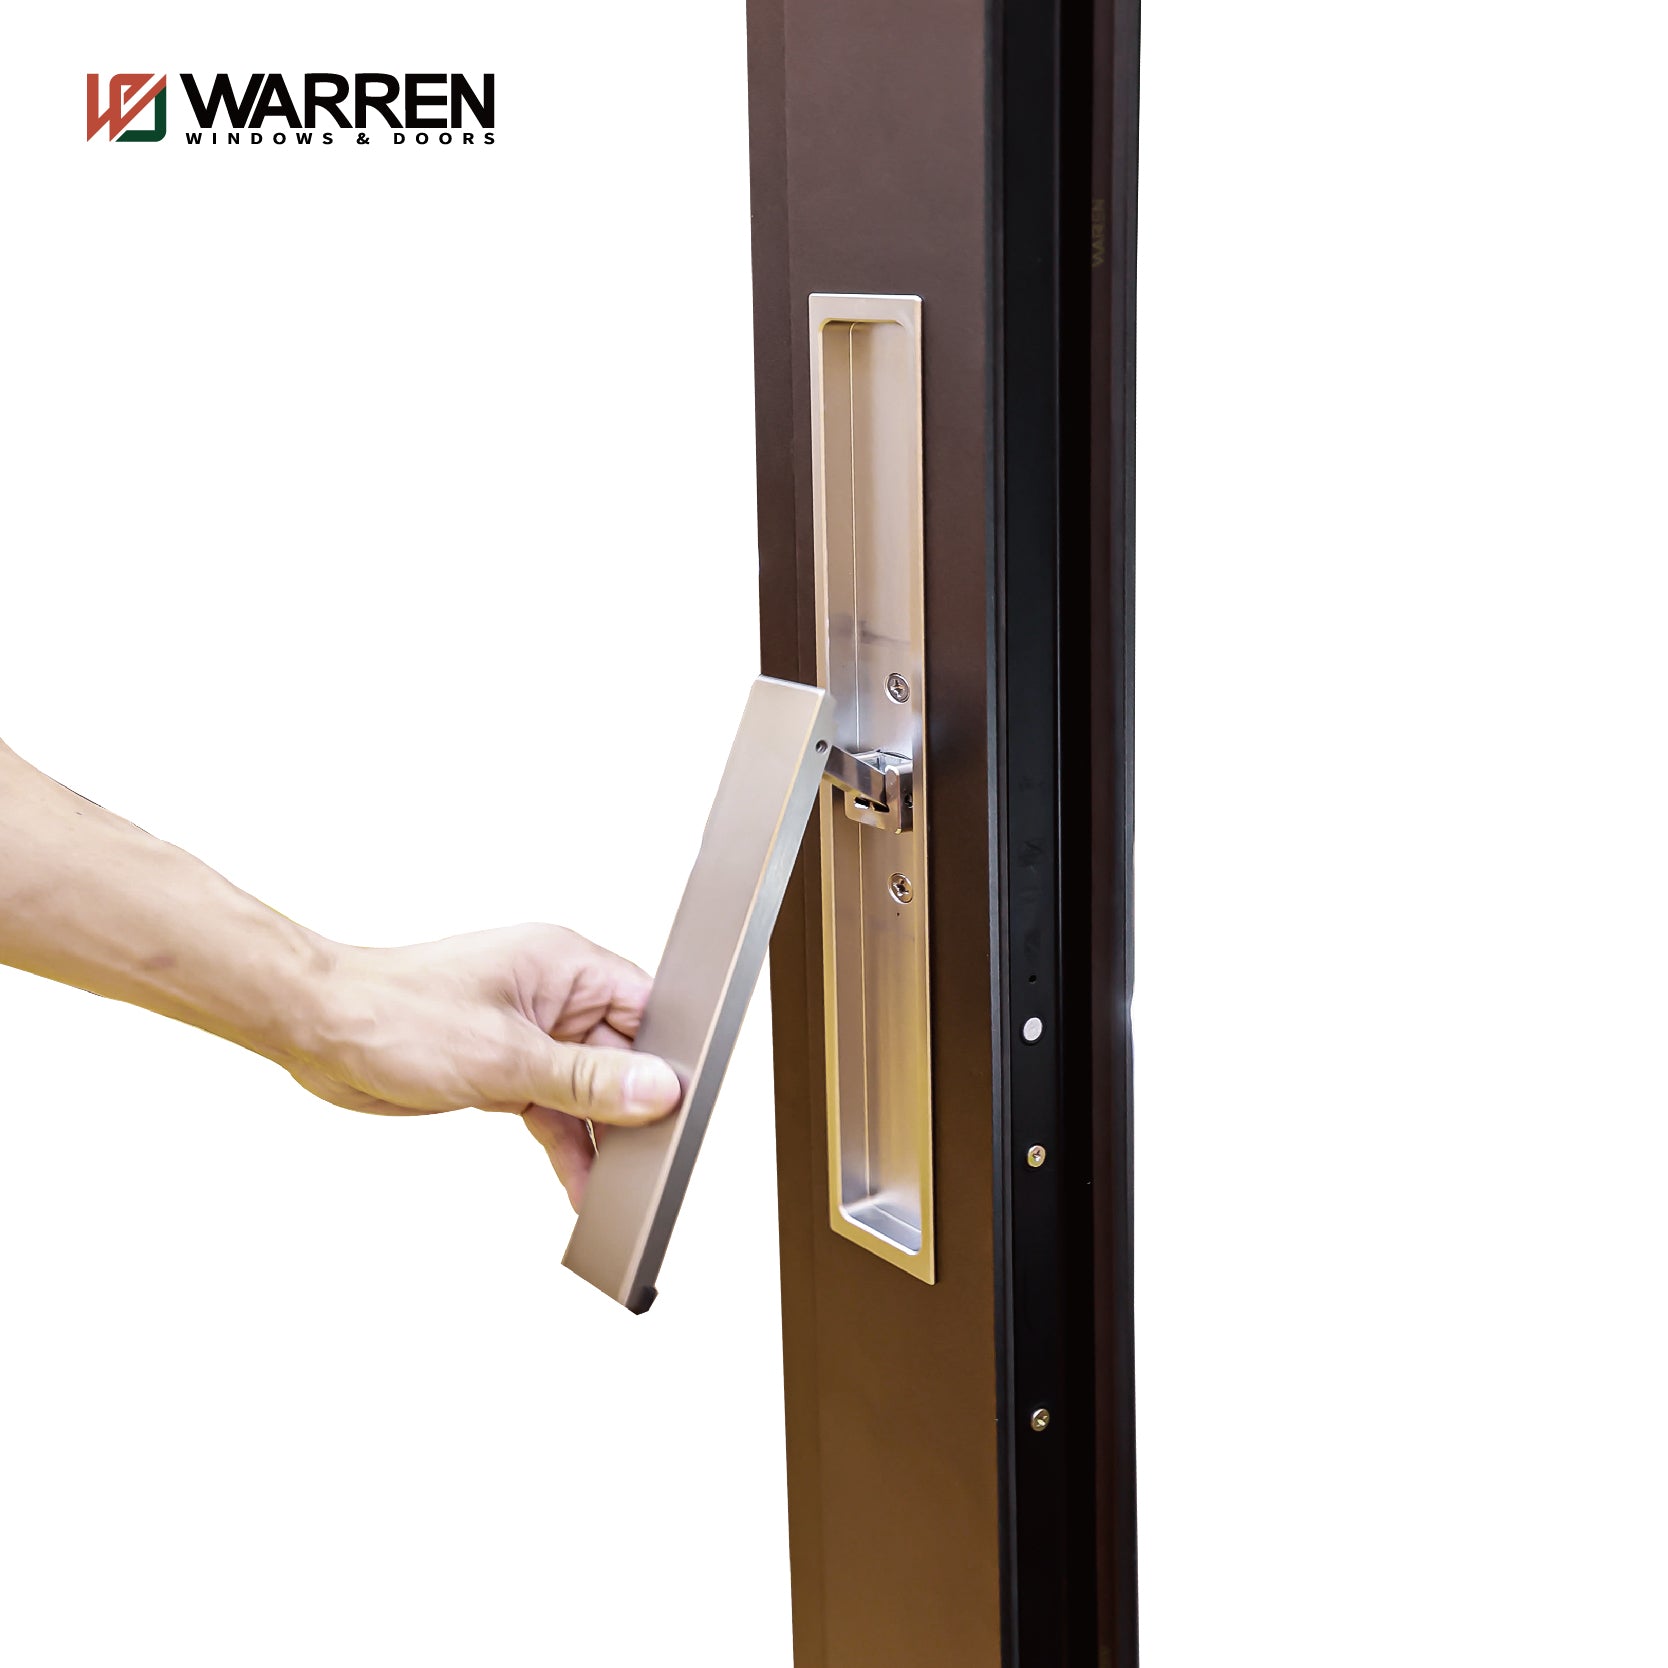 Warren Aluminium Double Glazed Sliding Patio Doors Thermal Break Patio Aluminum Lift Sliding Door